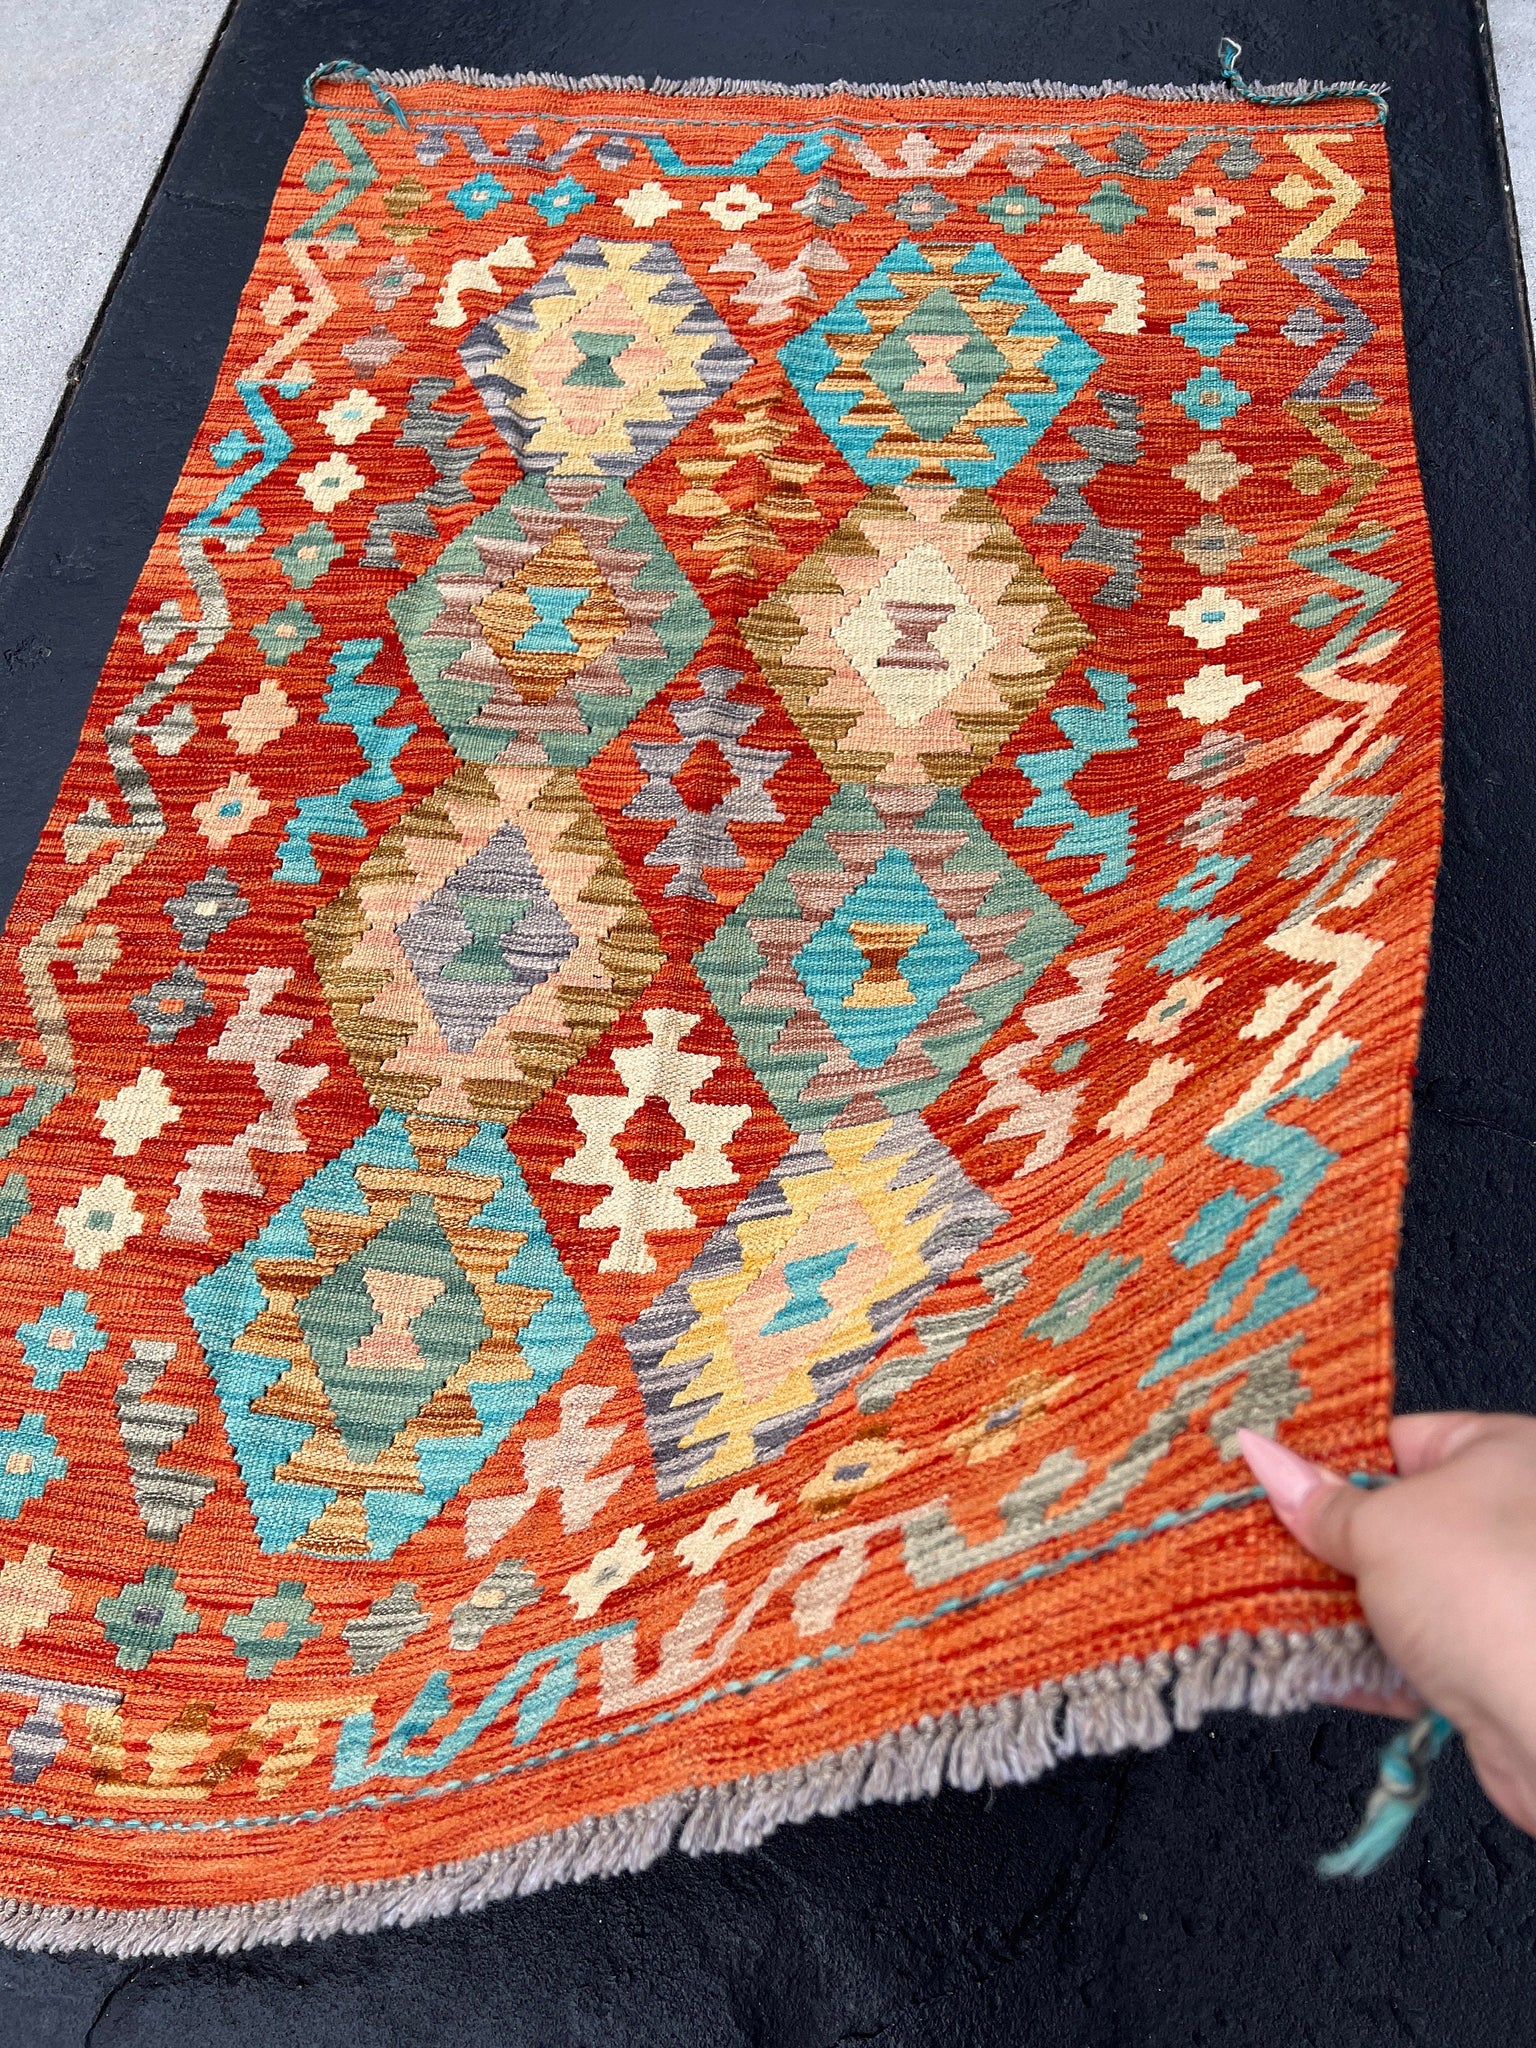 3x5 (91x152) Handmade Afghan Kilim Runner Rug | Burnt Orange Cornsilk Yellow Teal Chocolate Brown Turquoise Cream Beige Grey Tan Blue